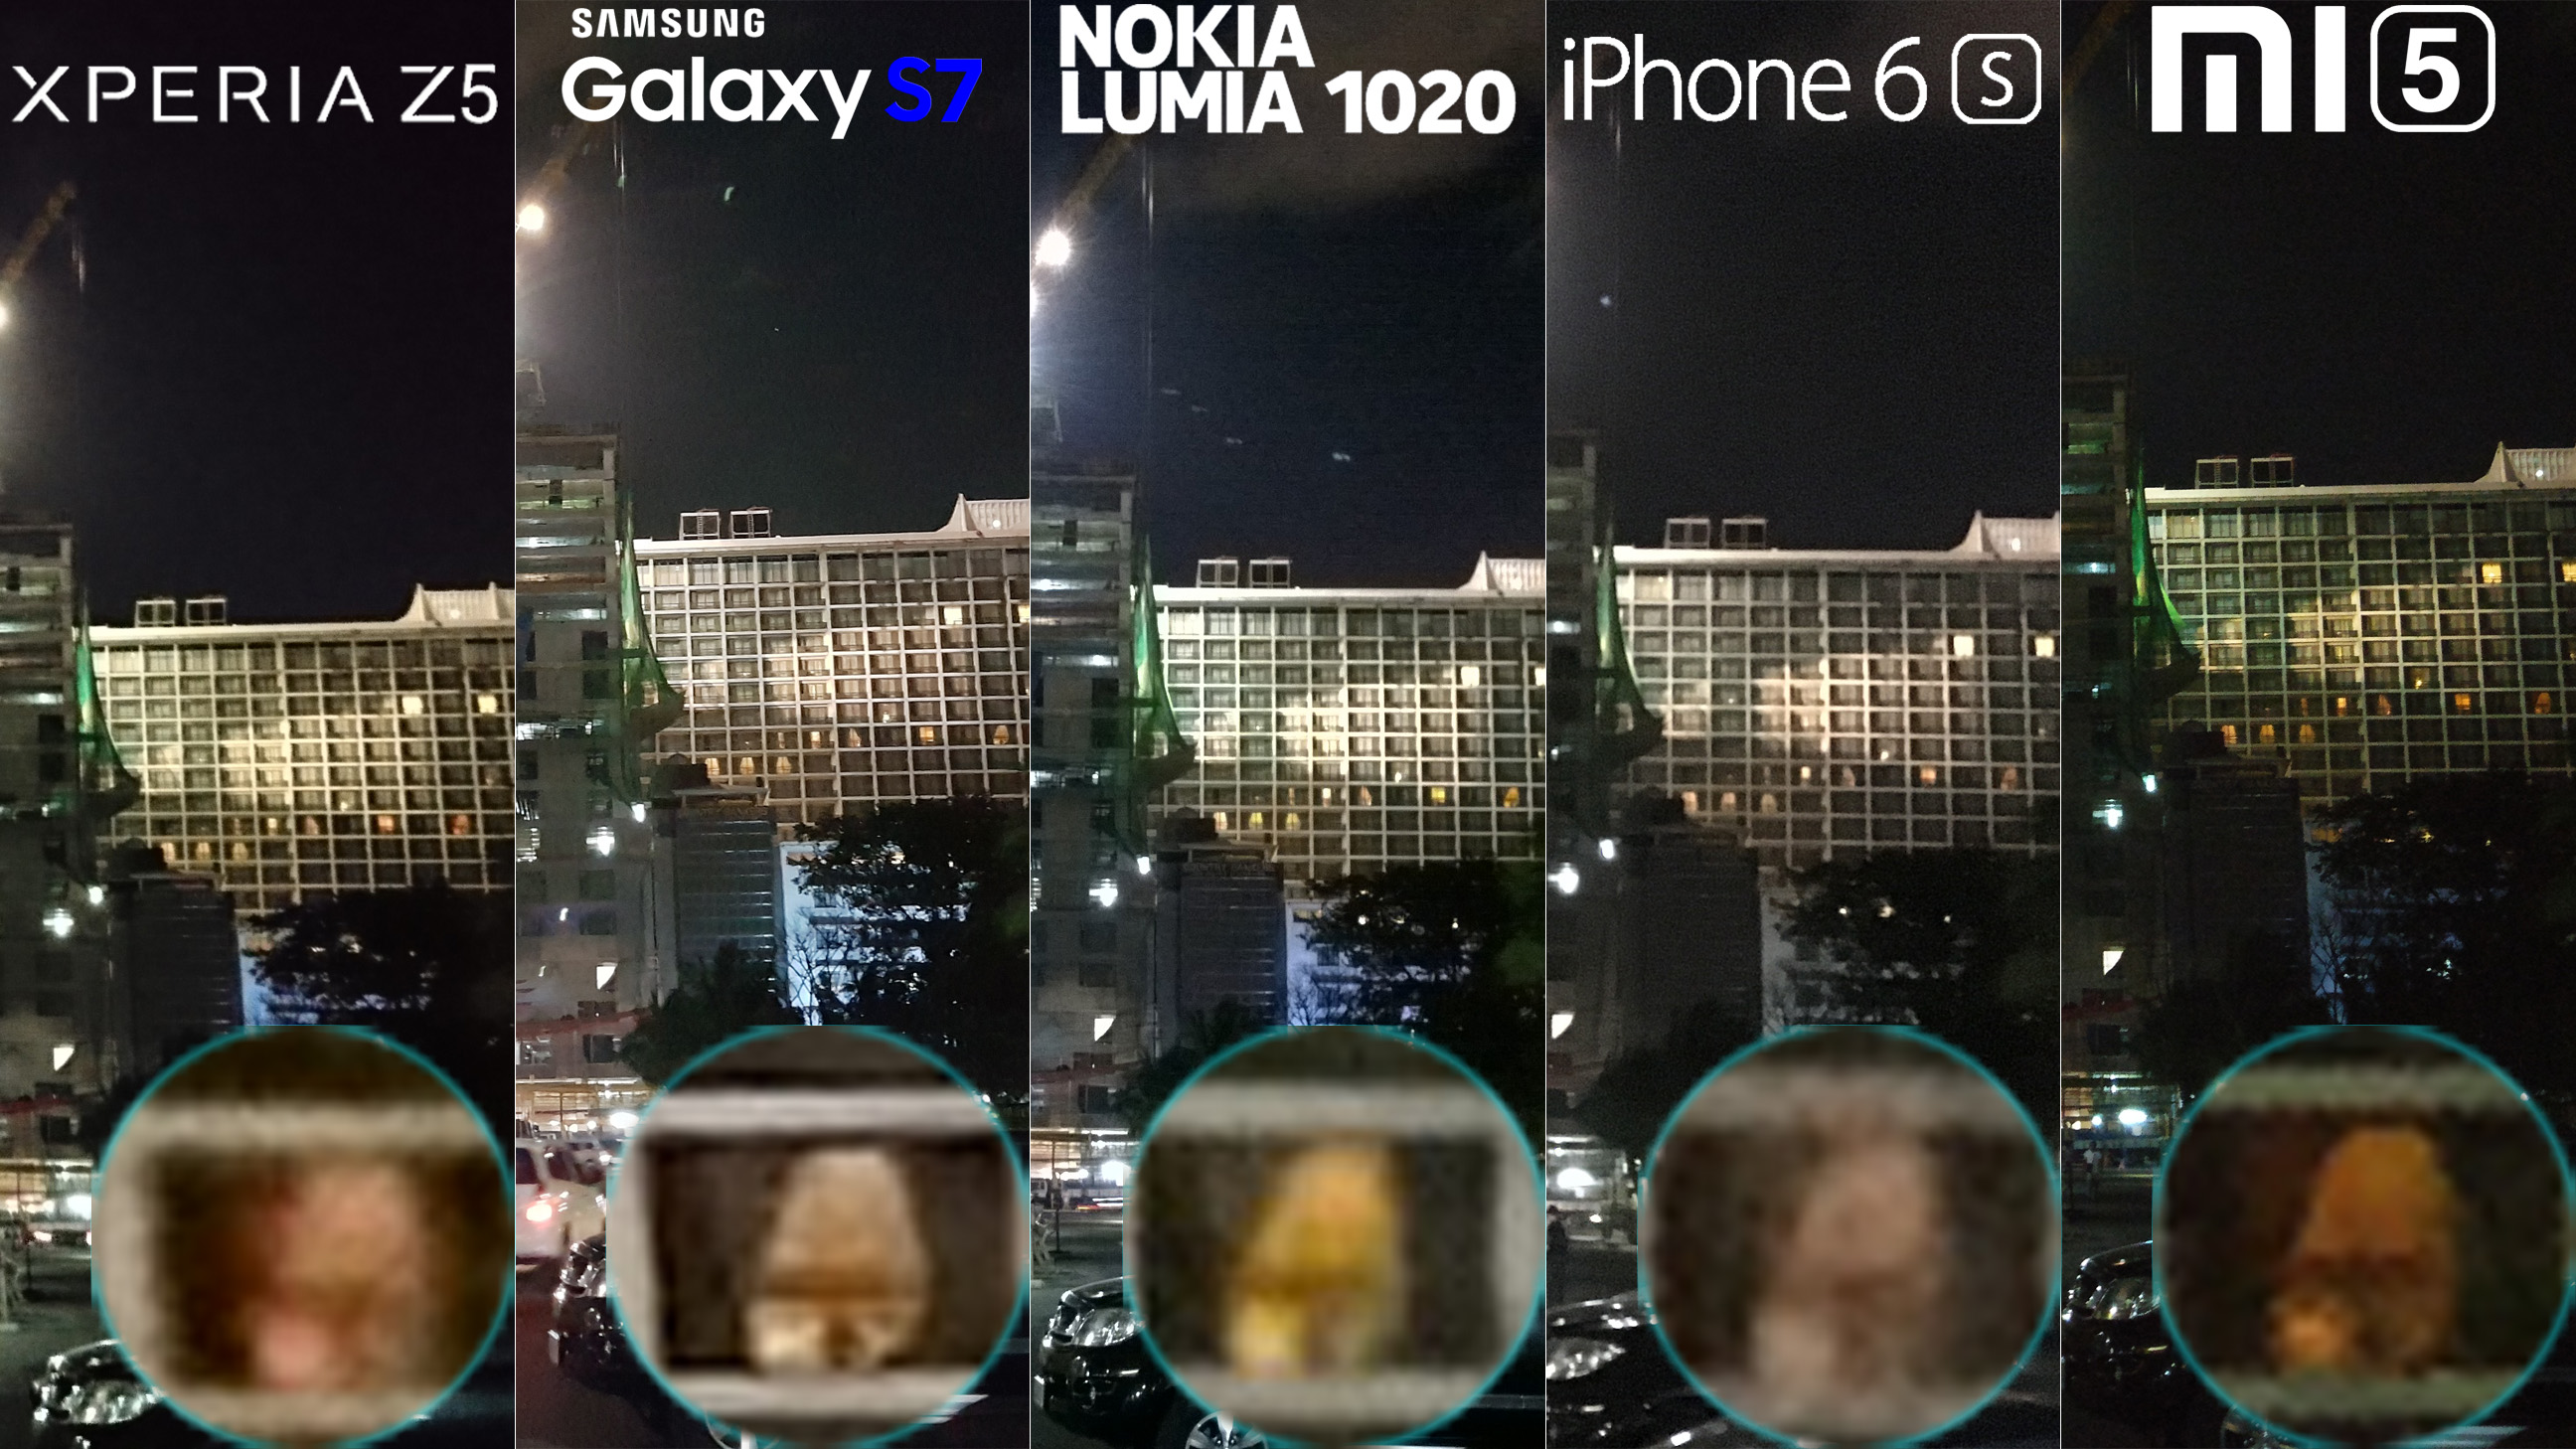 Сравнение камер galaxy. Камера айфон 11 и самсунг а52 сравнение. Сравнение камер самсунг а8 и айфон 11. Сравнение фотографий смартфонов. Самсунг с камерой айфона.